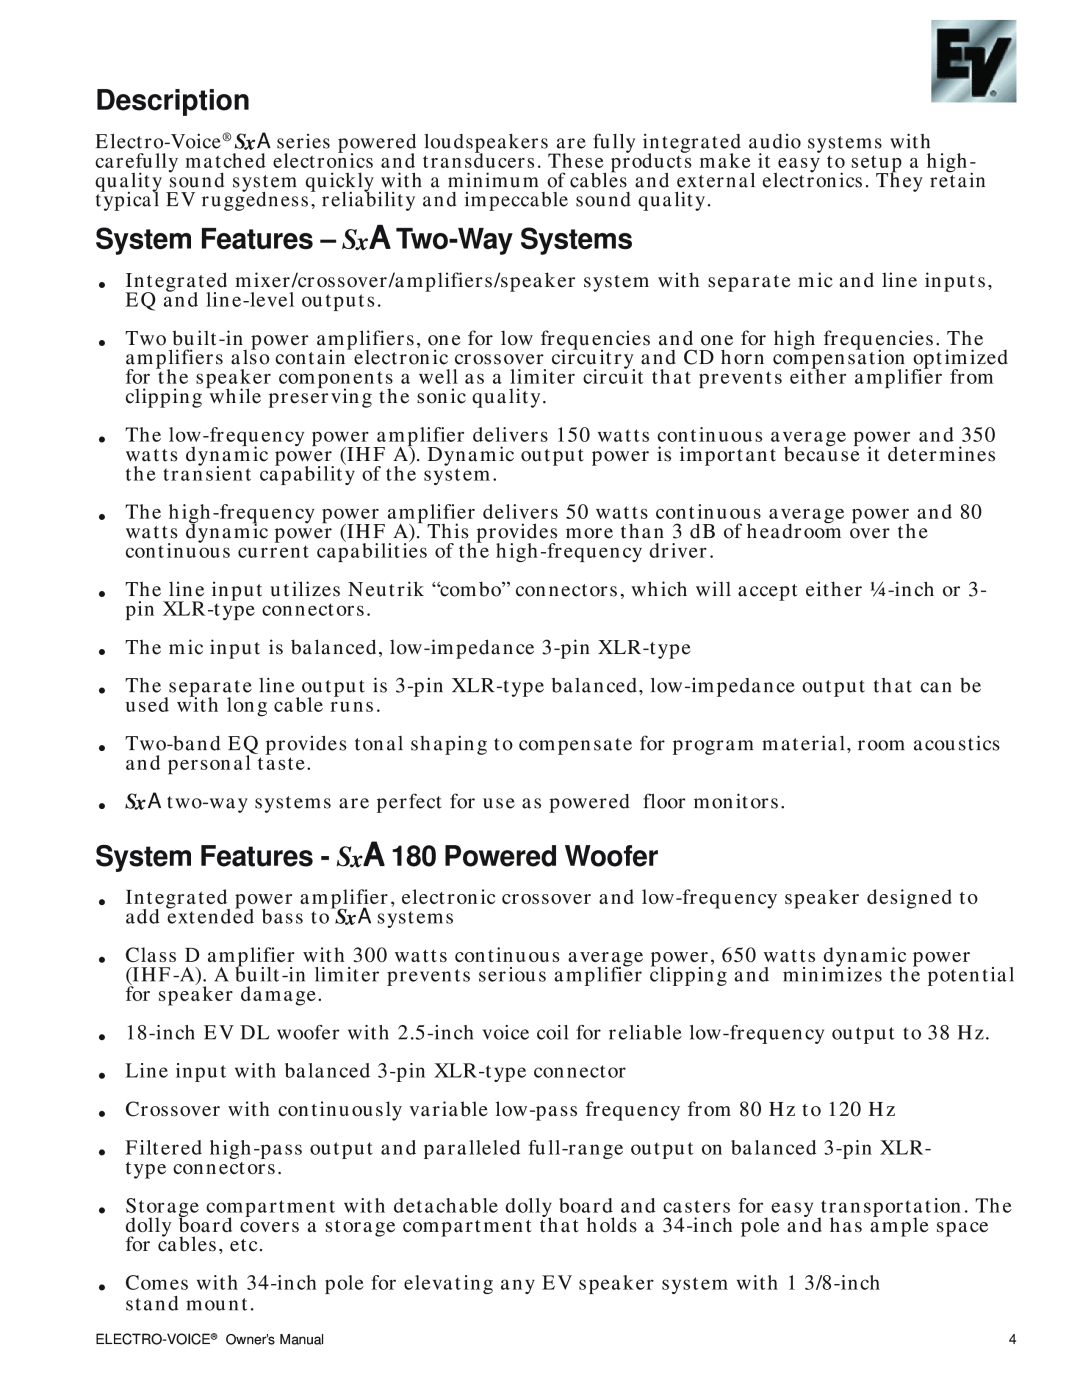 Electro-Voice SxA100+ Description, System Features - SxA Two-WaySystems, System Features - SxA 180 Powered Woofer 